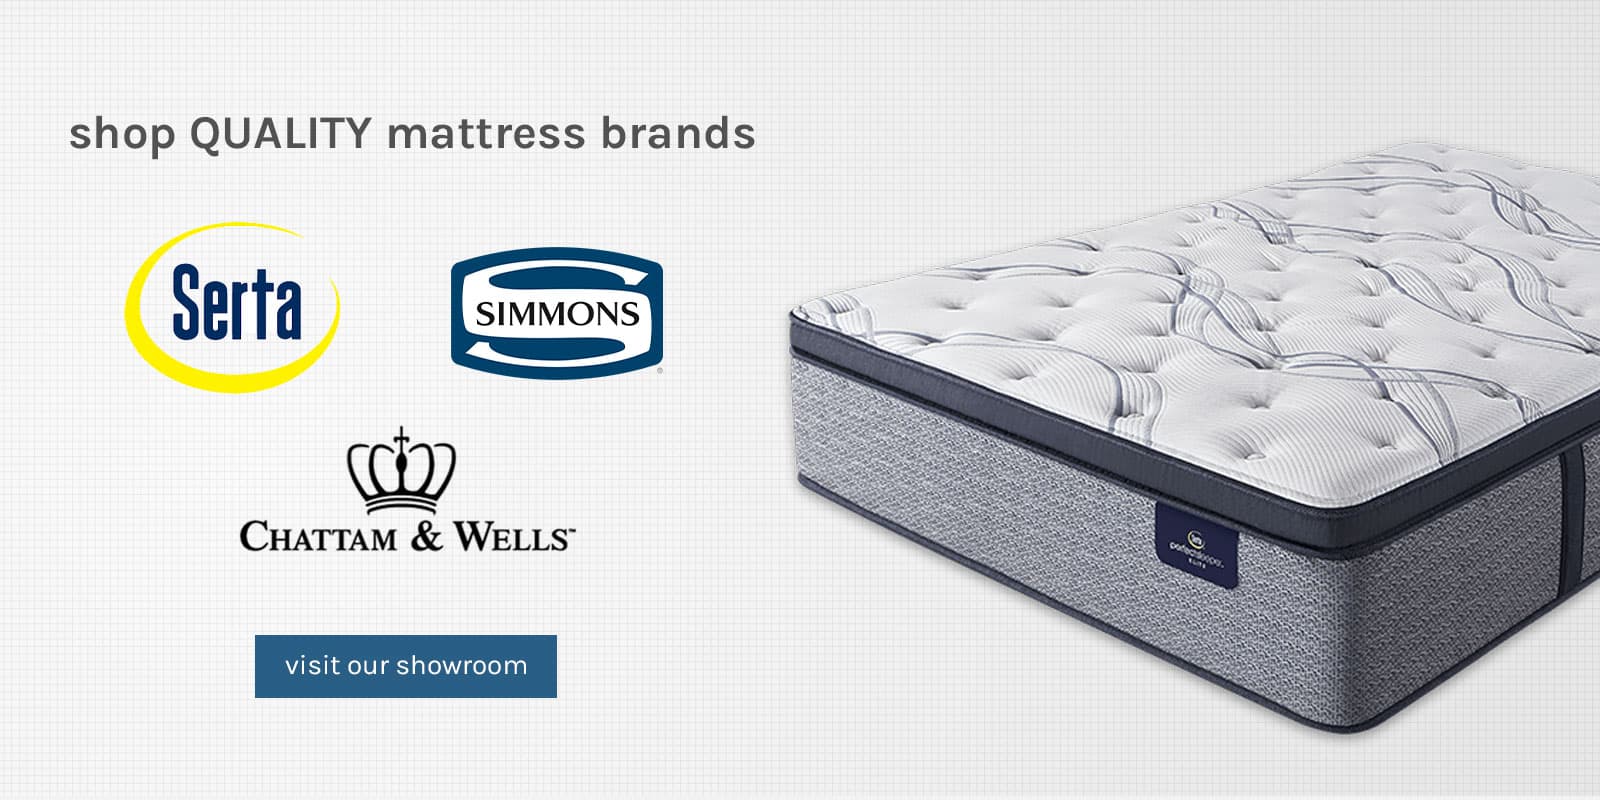 shop quality mattress brands – visit our showroom